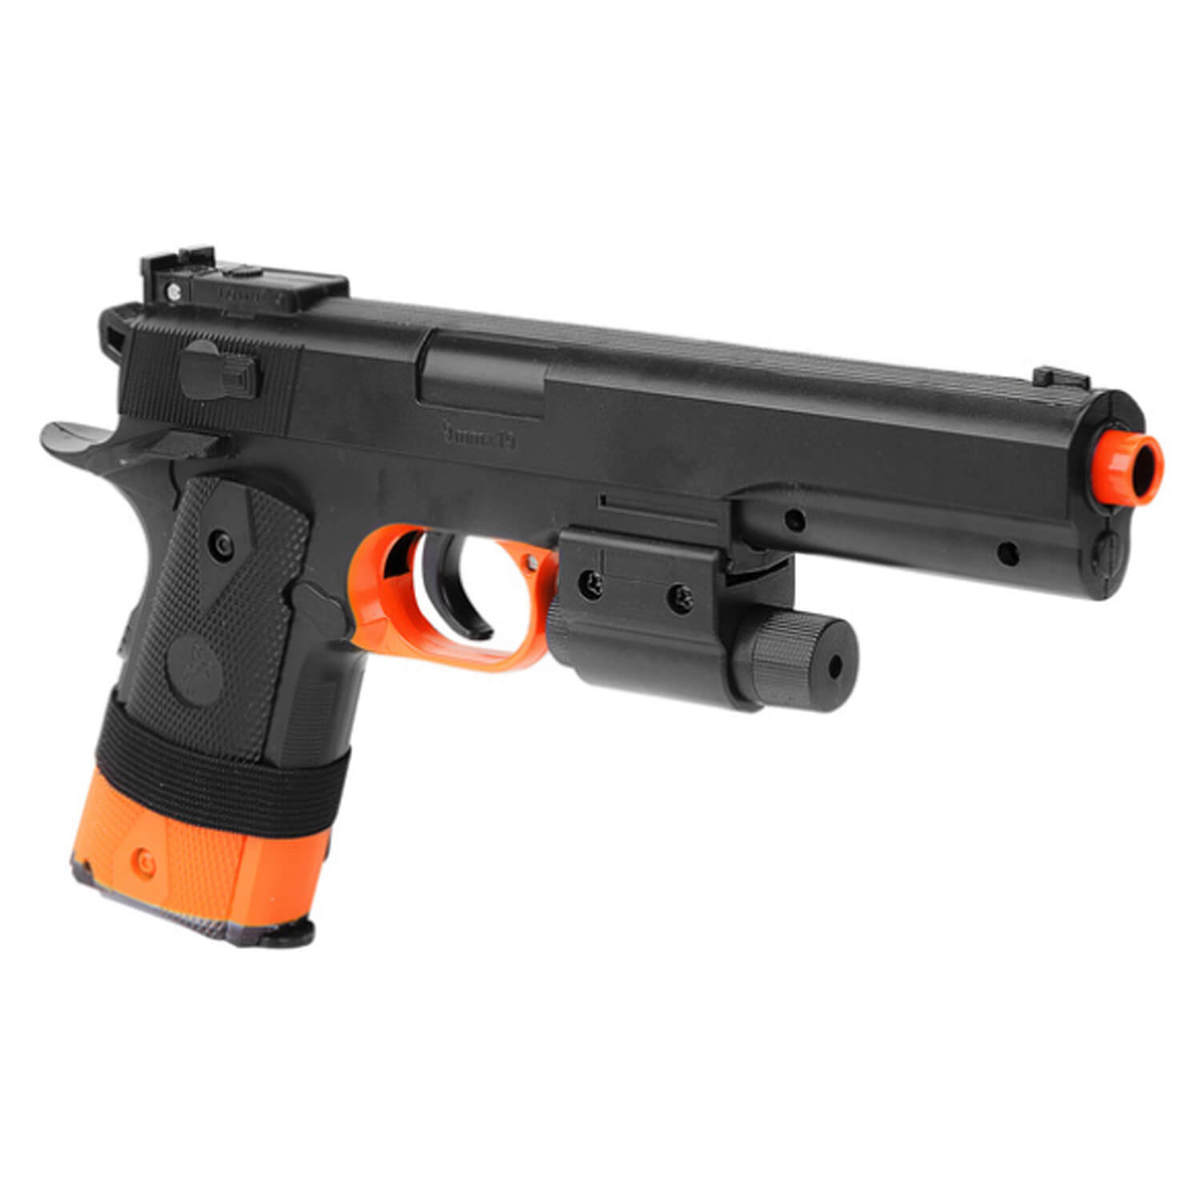 Soft Air Colt 1911 6mm Caliber Air Pistol With Laser Sight - Black/Orange